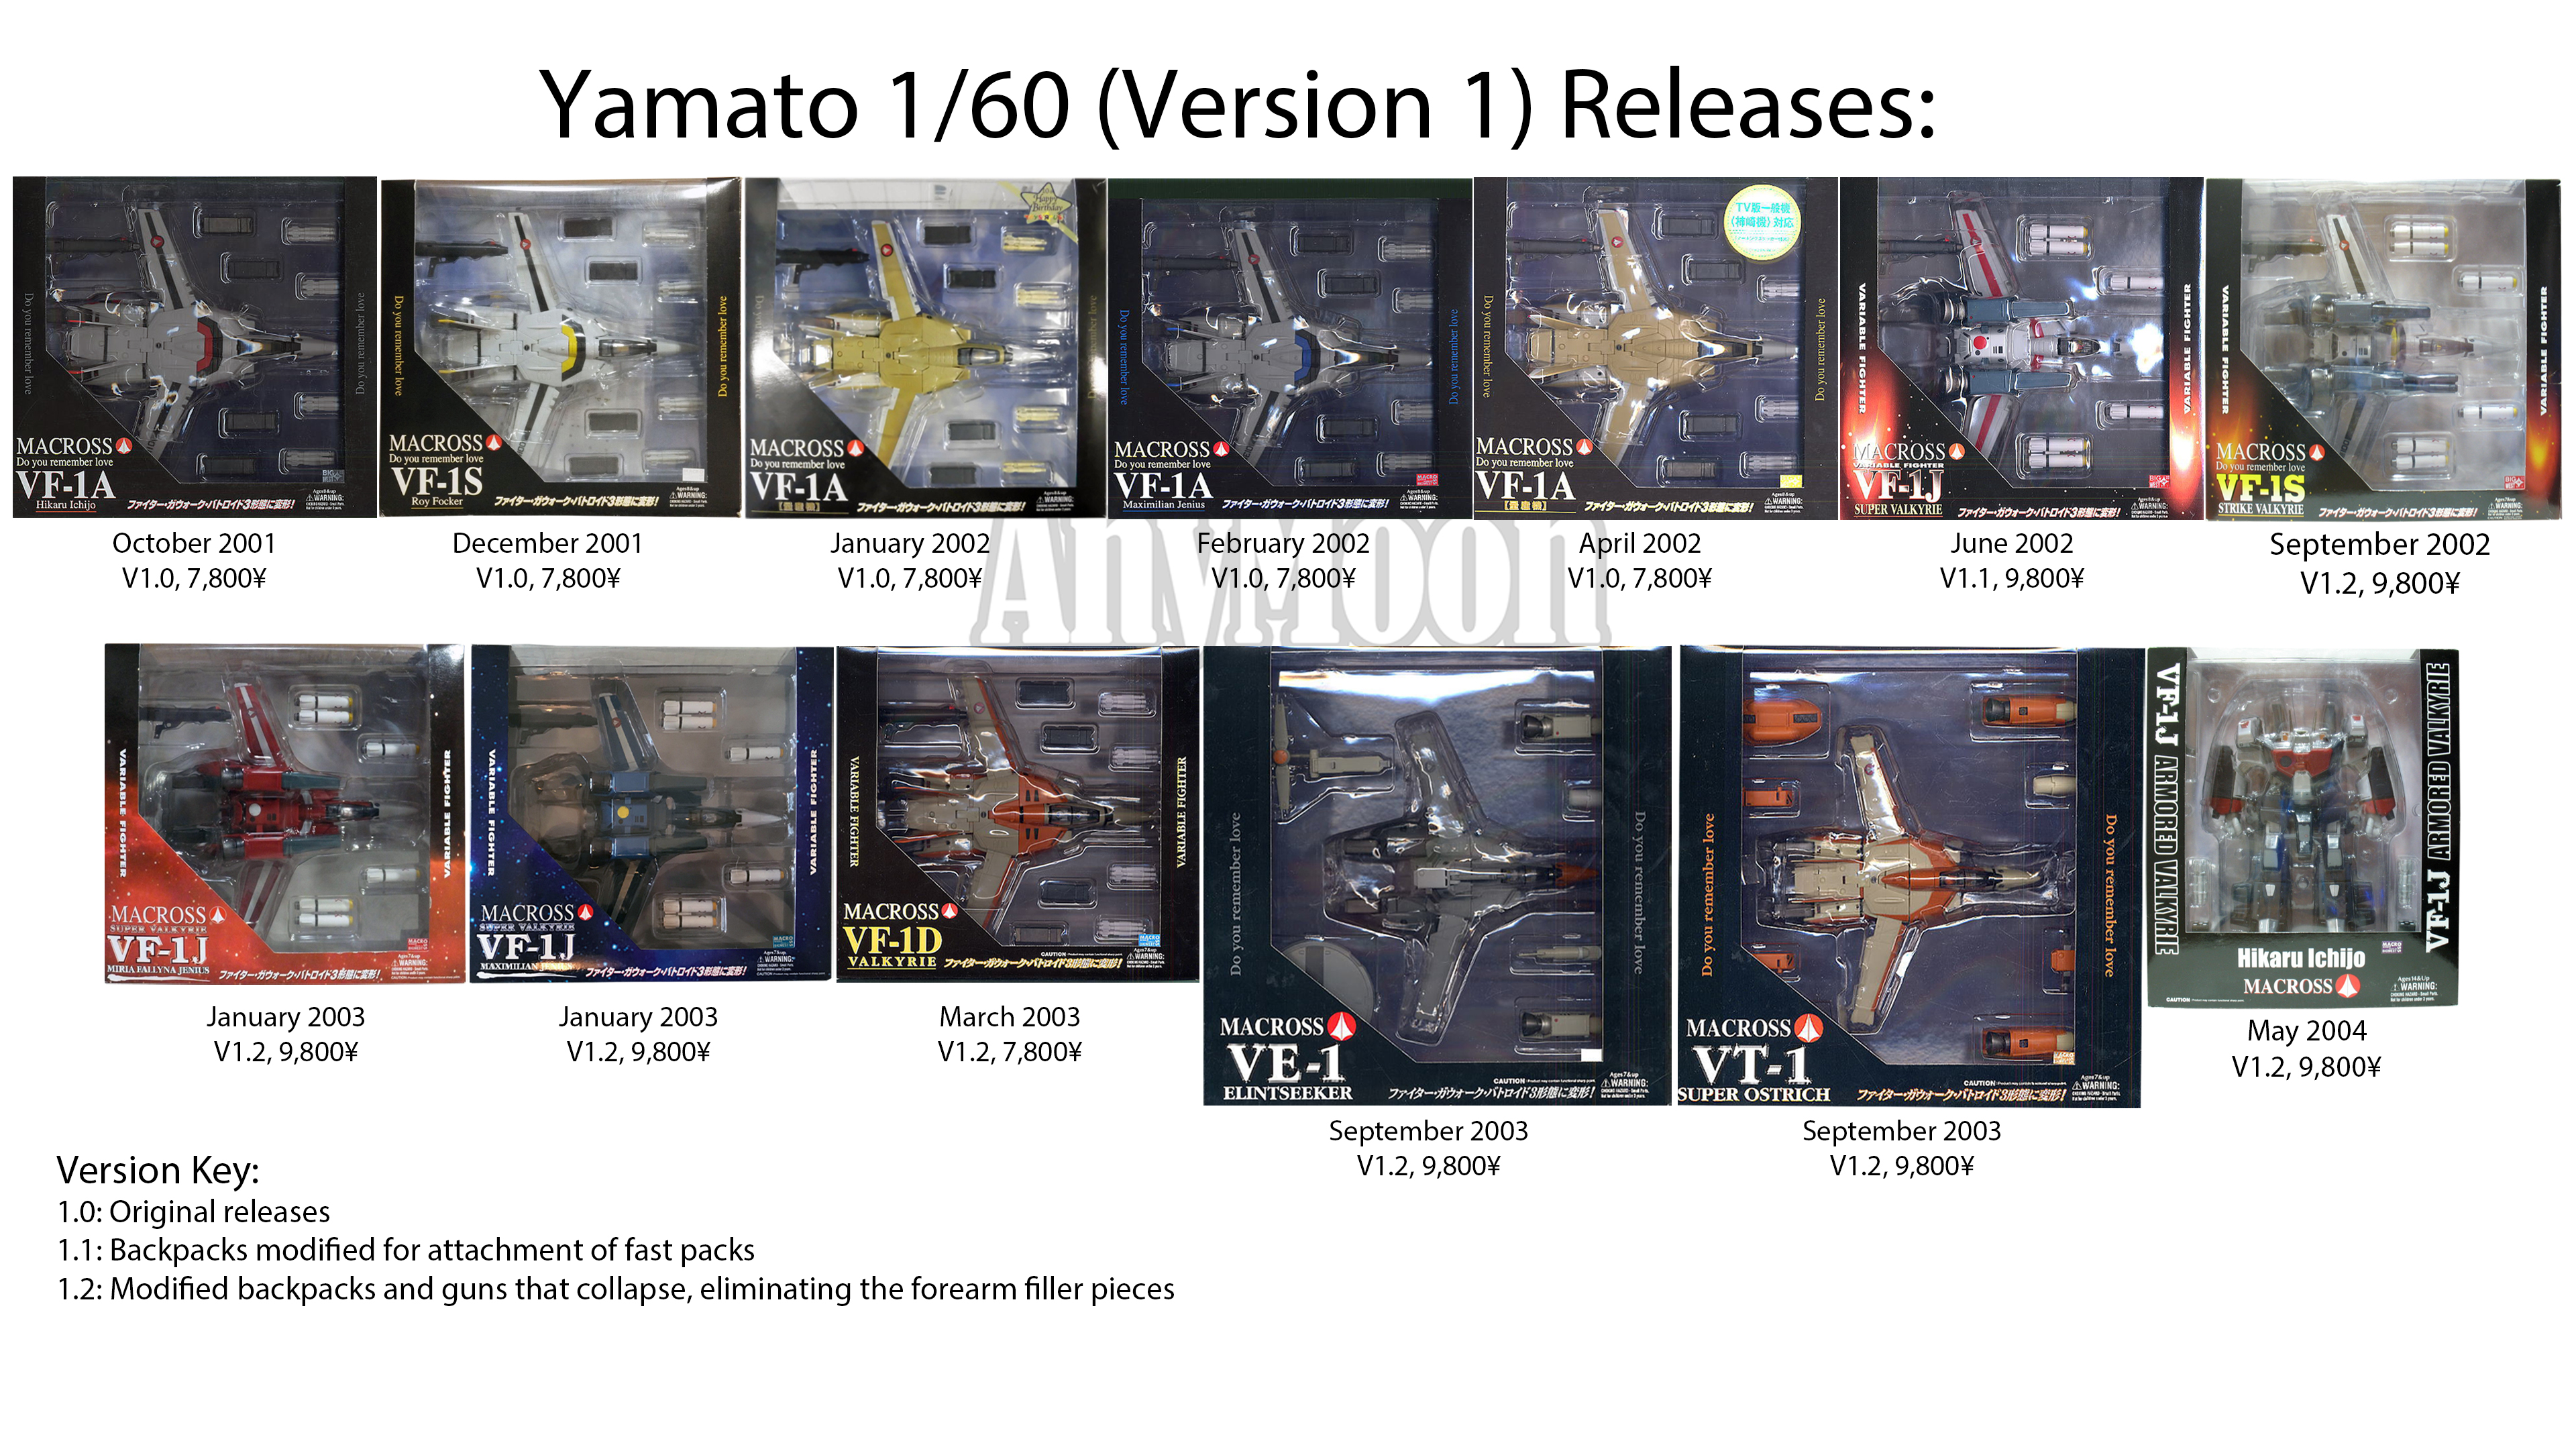 Yamato-Version-1-Releases-1.jpg